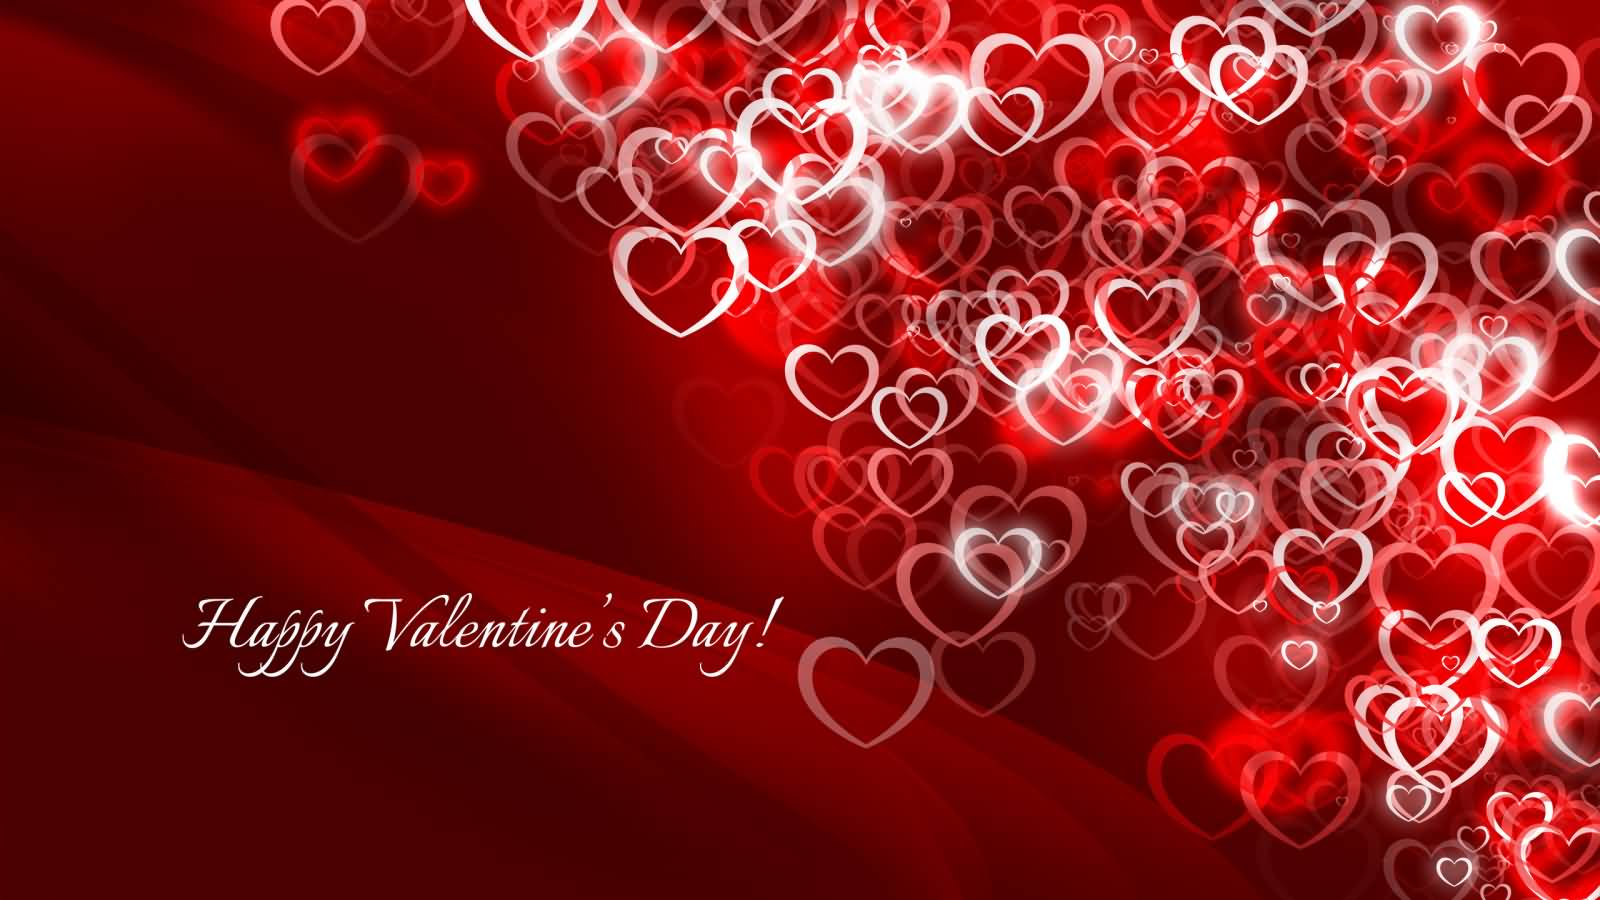 Happy Valentine's Day Hearts Picture